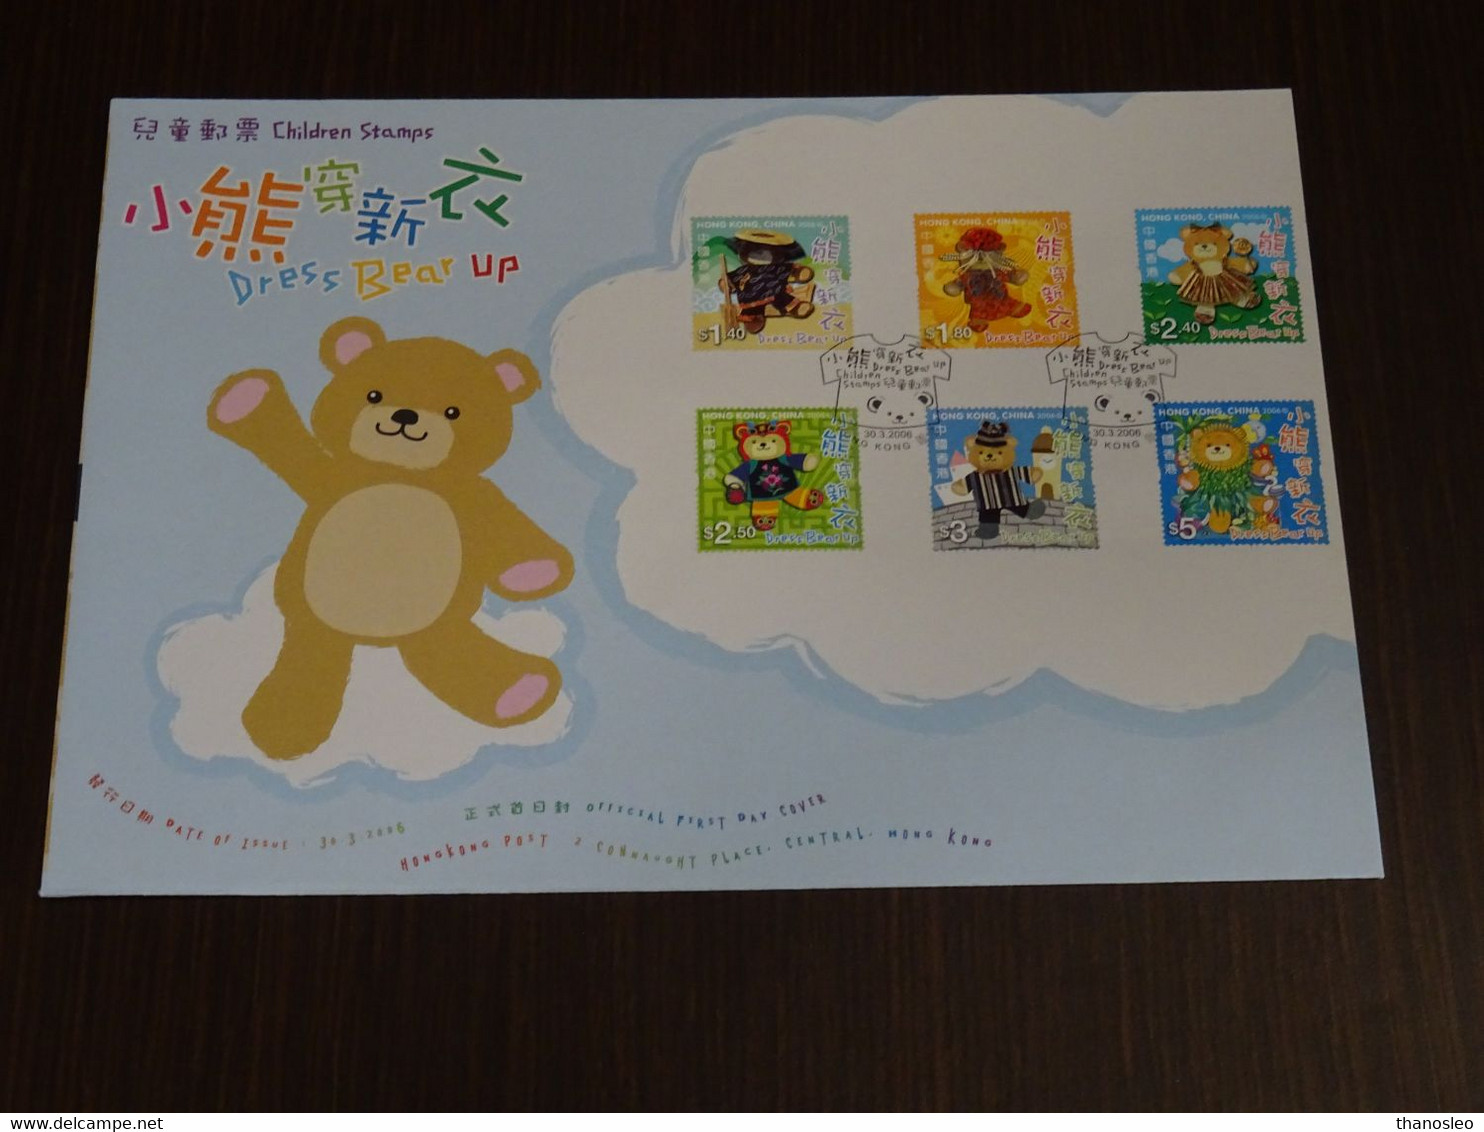 Hong Kong 2006 Children Stamps Dress Bear Up FDC VF - FDC